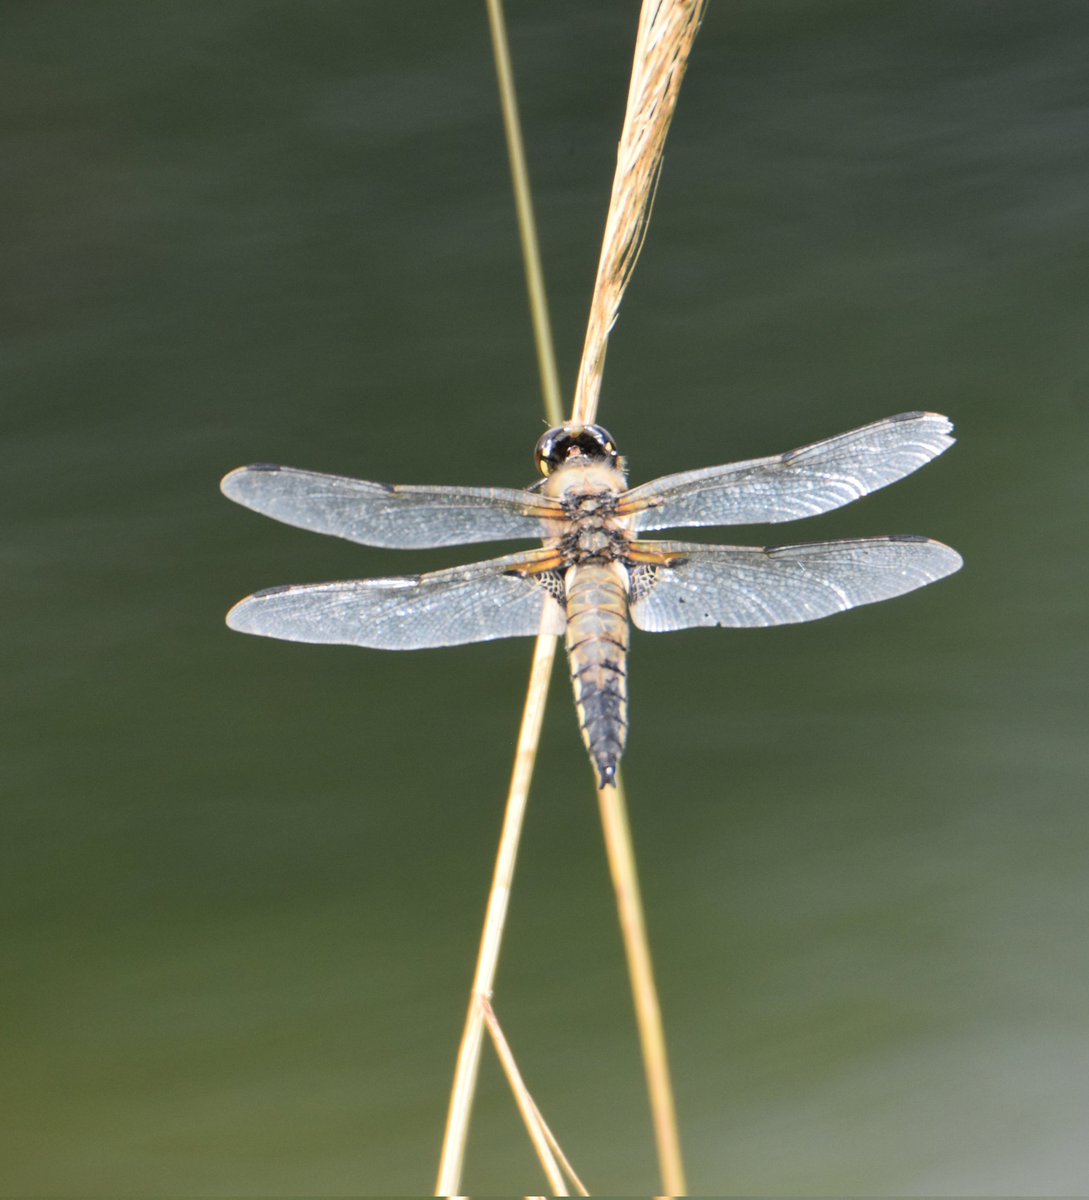 Dragon fly,newtownmountkennedy. #vmweather #ThePhotoHour #nature #Dragonfly #wicklow #Ireland